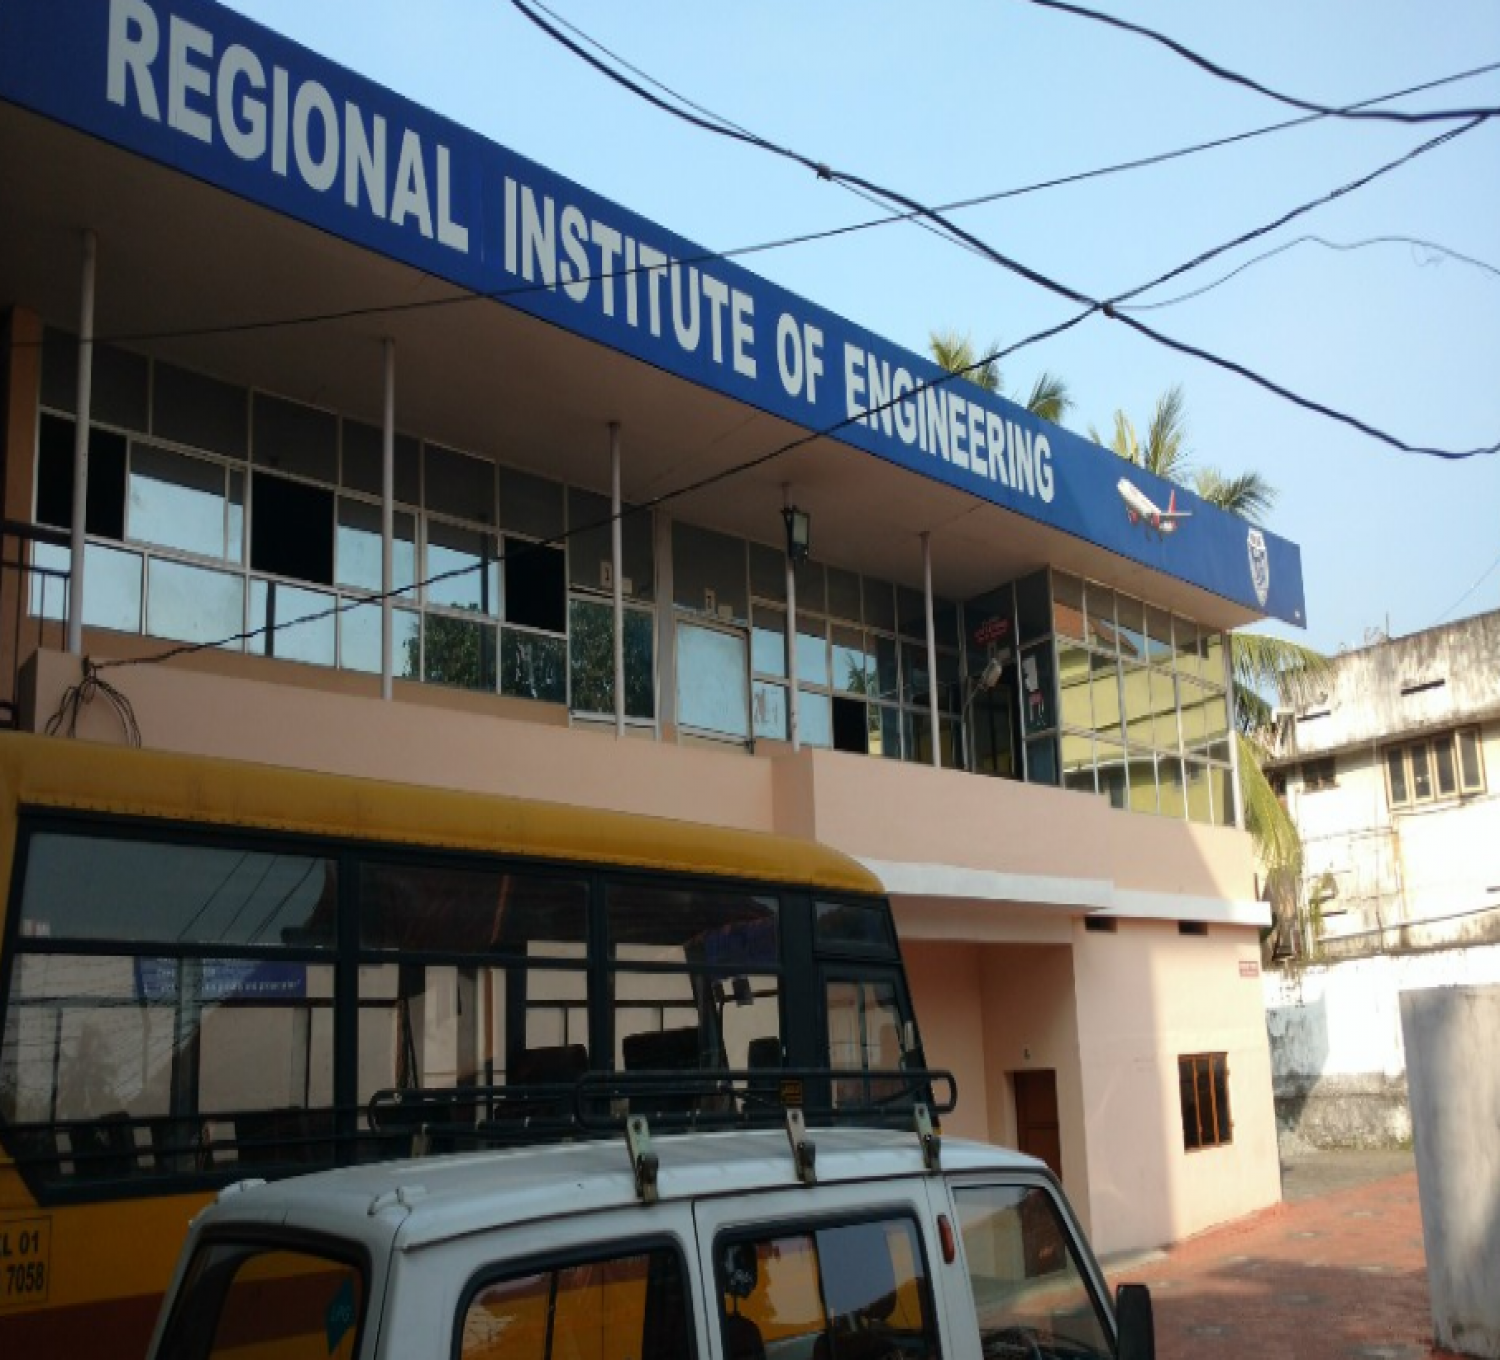 Regional Institute of Engineering-cover